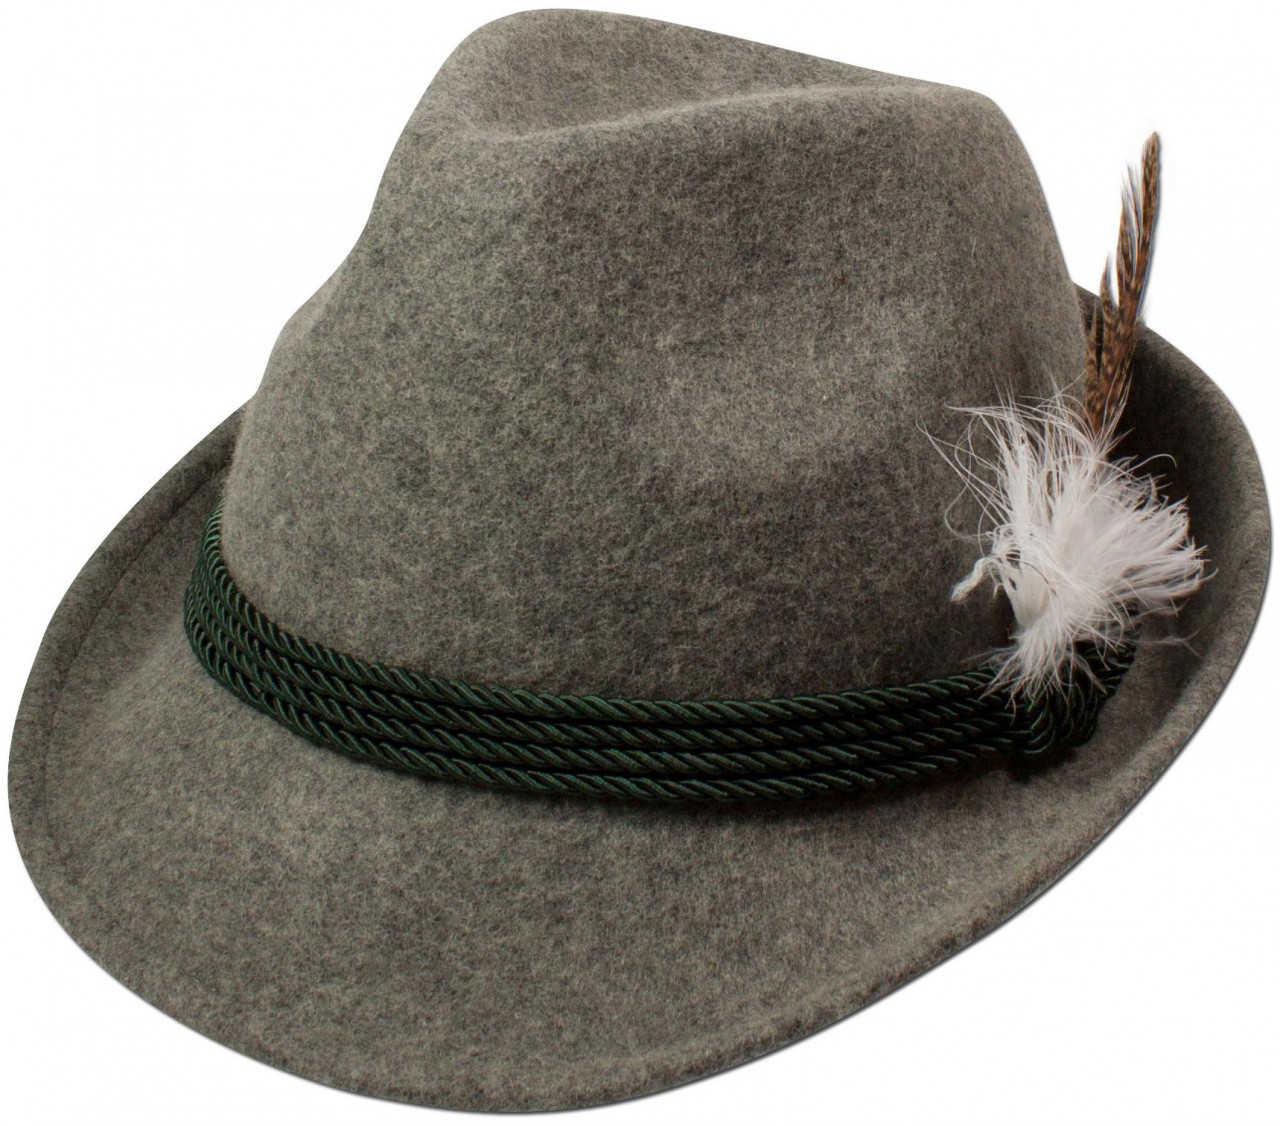 Trachten Felt Hat with Feather, Grey